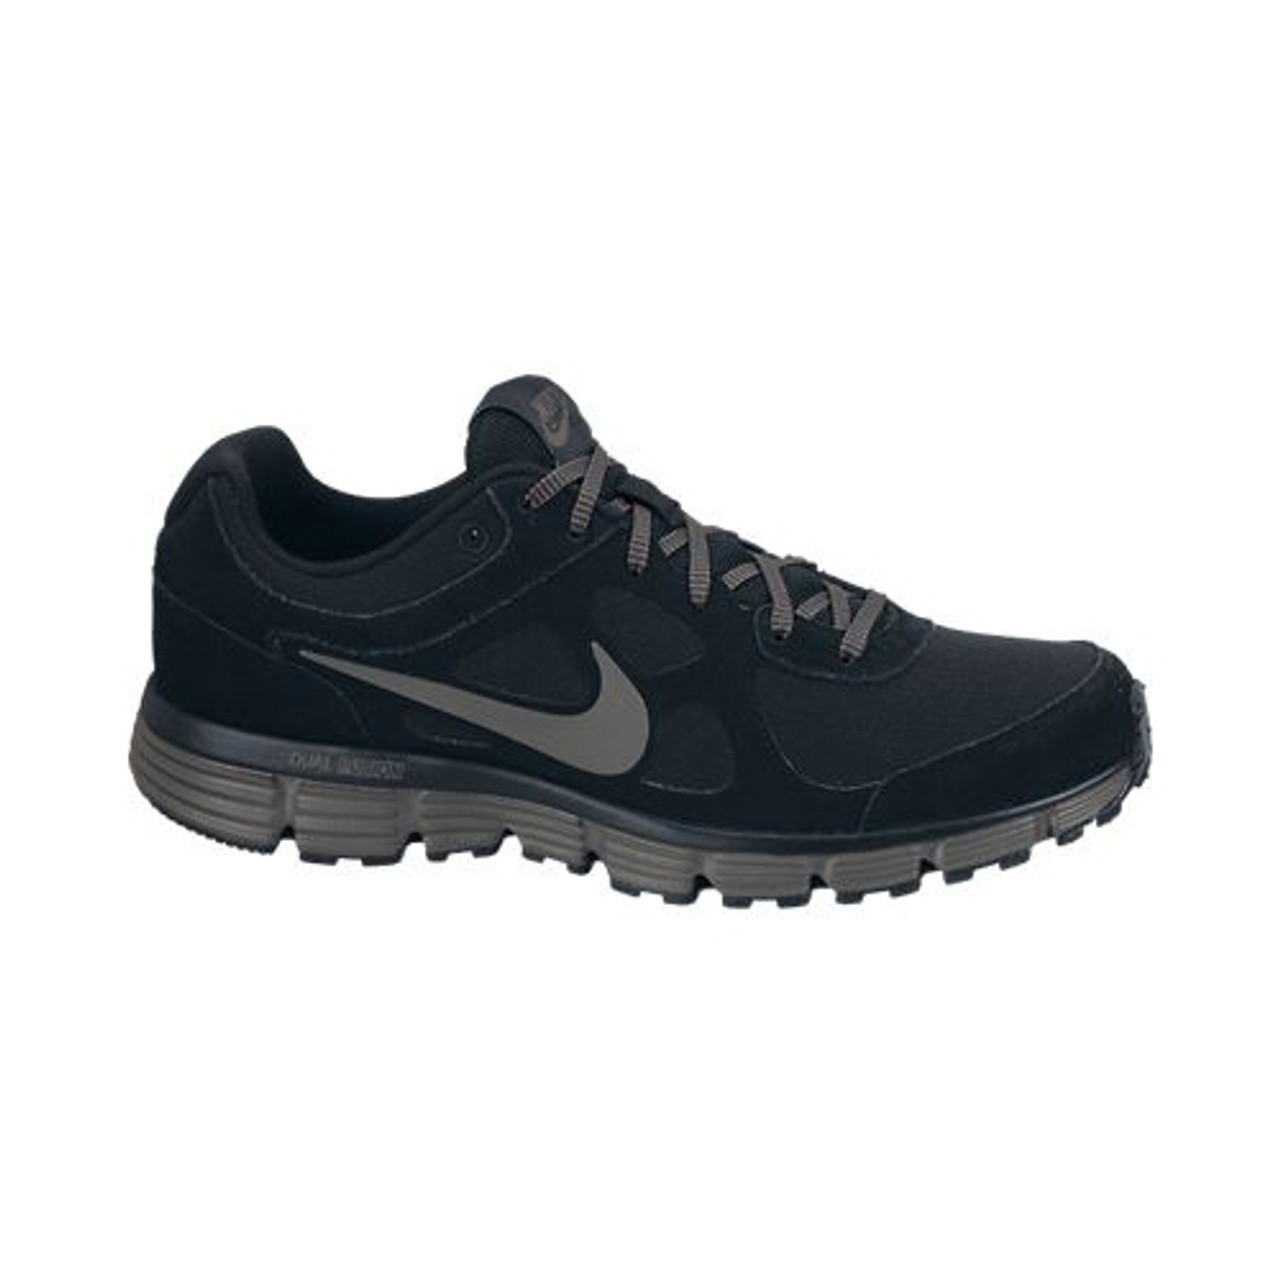 Sequía Autocomplacencia playa Nike Dual Fusion Forever Black/Grey Mens Running Shoes - Black/Dark Grey |  Discount Nike Men's Athletic & More - Shoolu.com | Shoolu.com